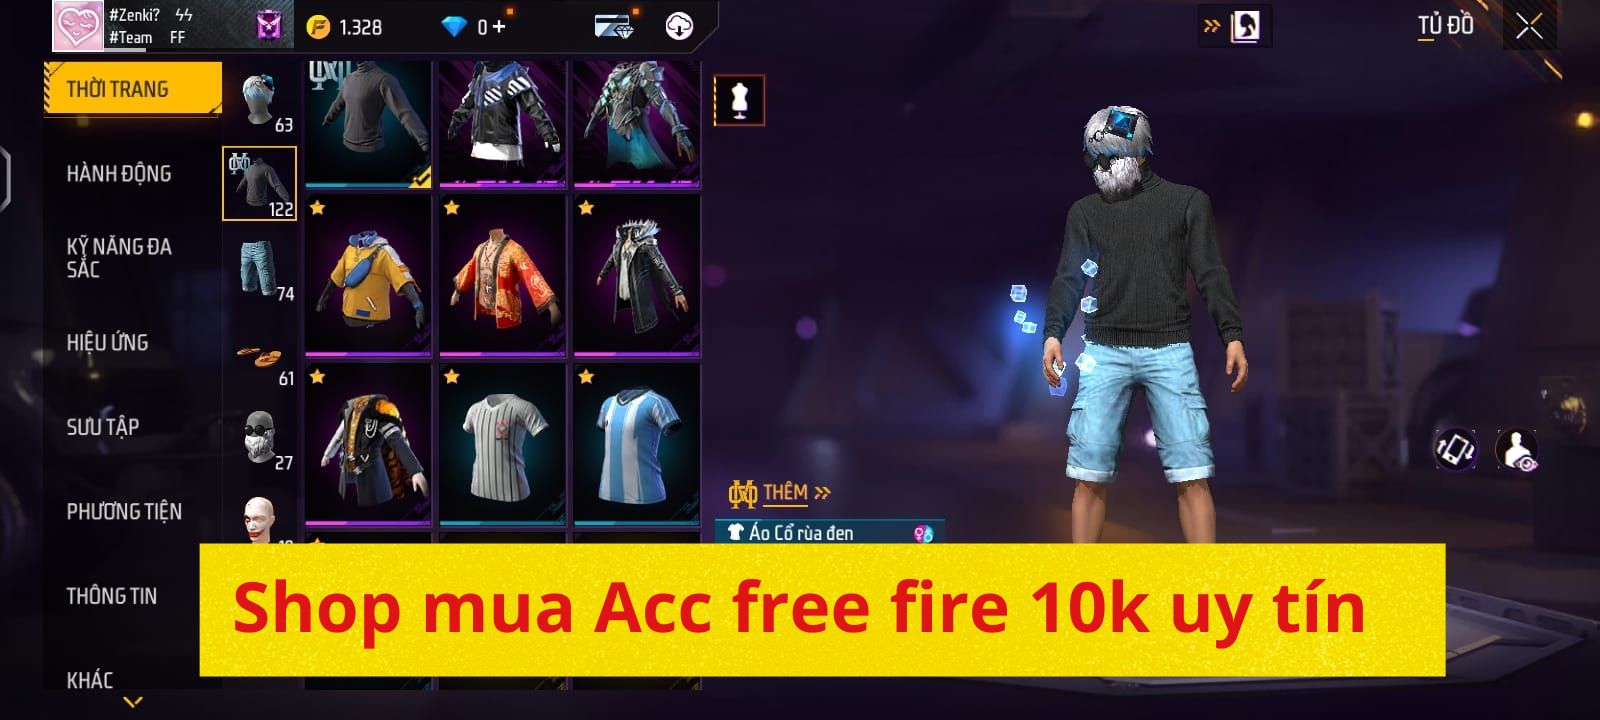 Shop mua Acc free fire 10k uy tín tại Shopacc.vn